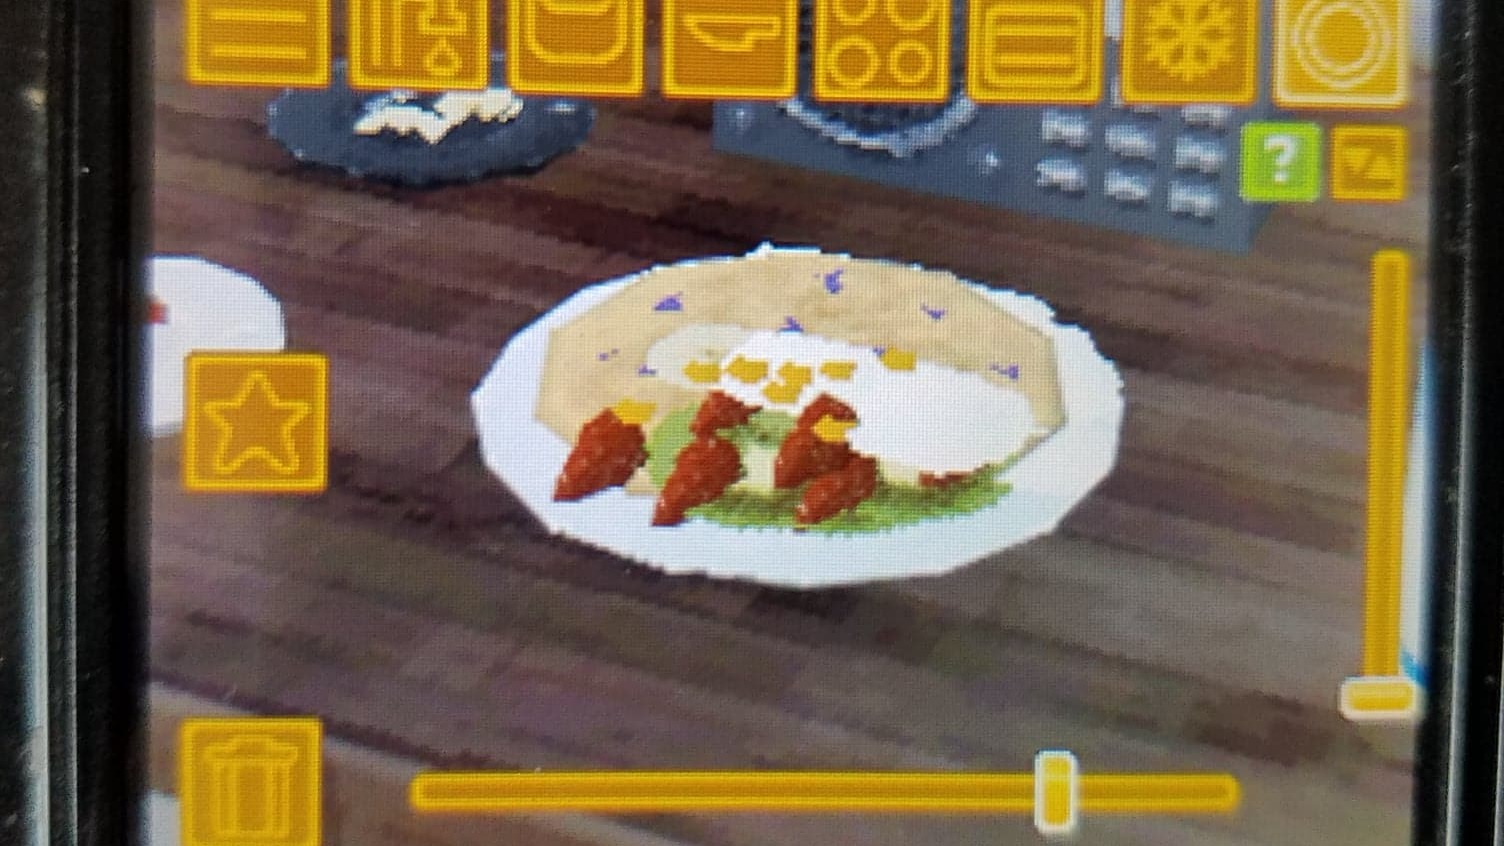 Very pixelated-looking plate of pancakes